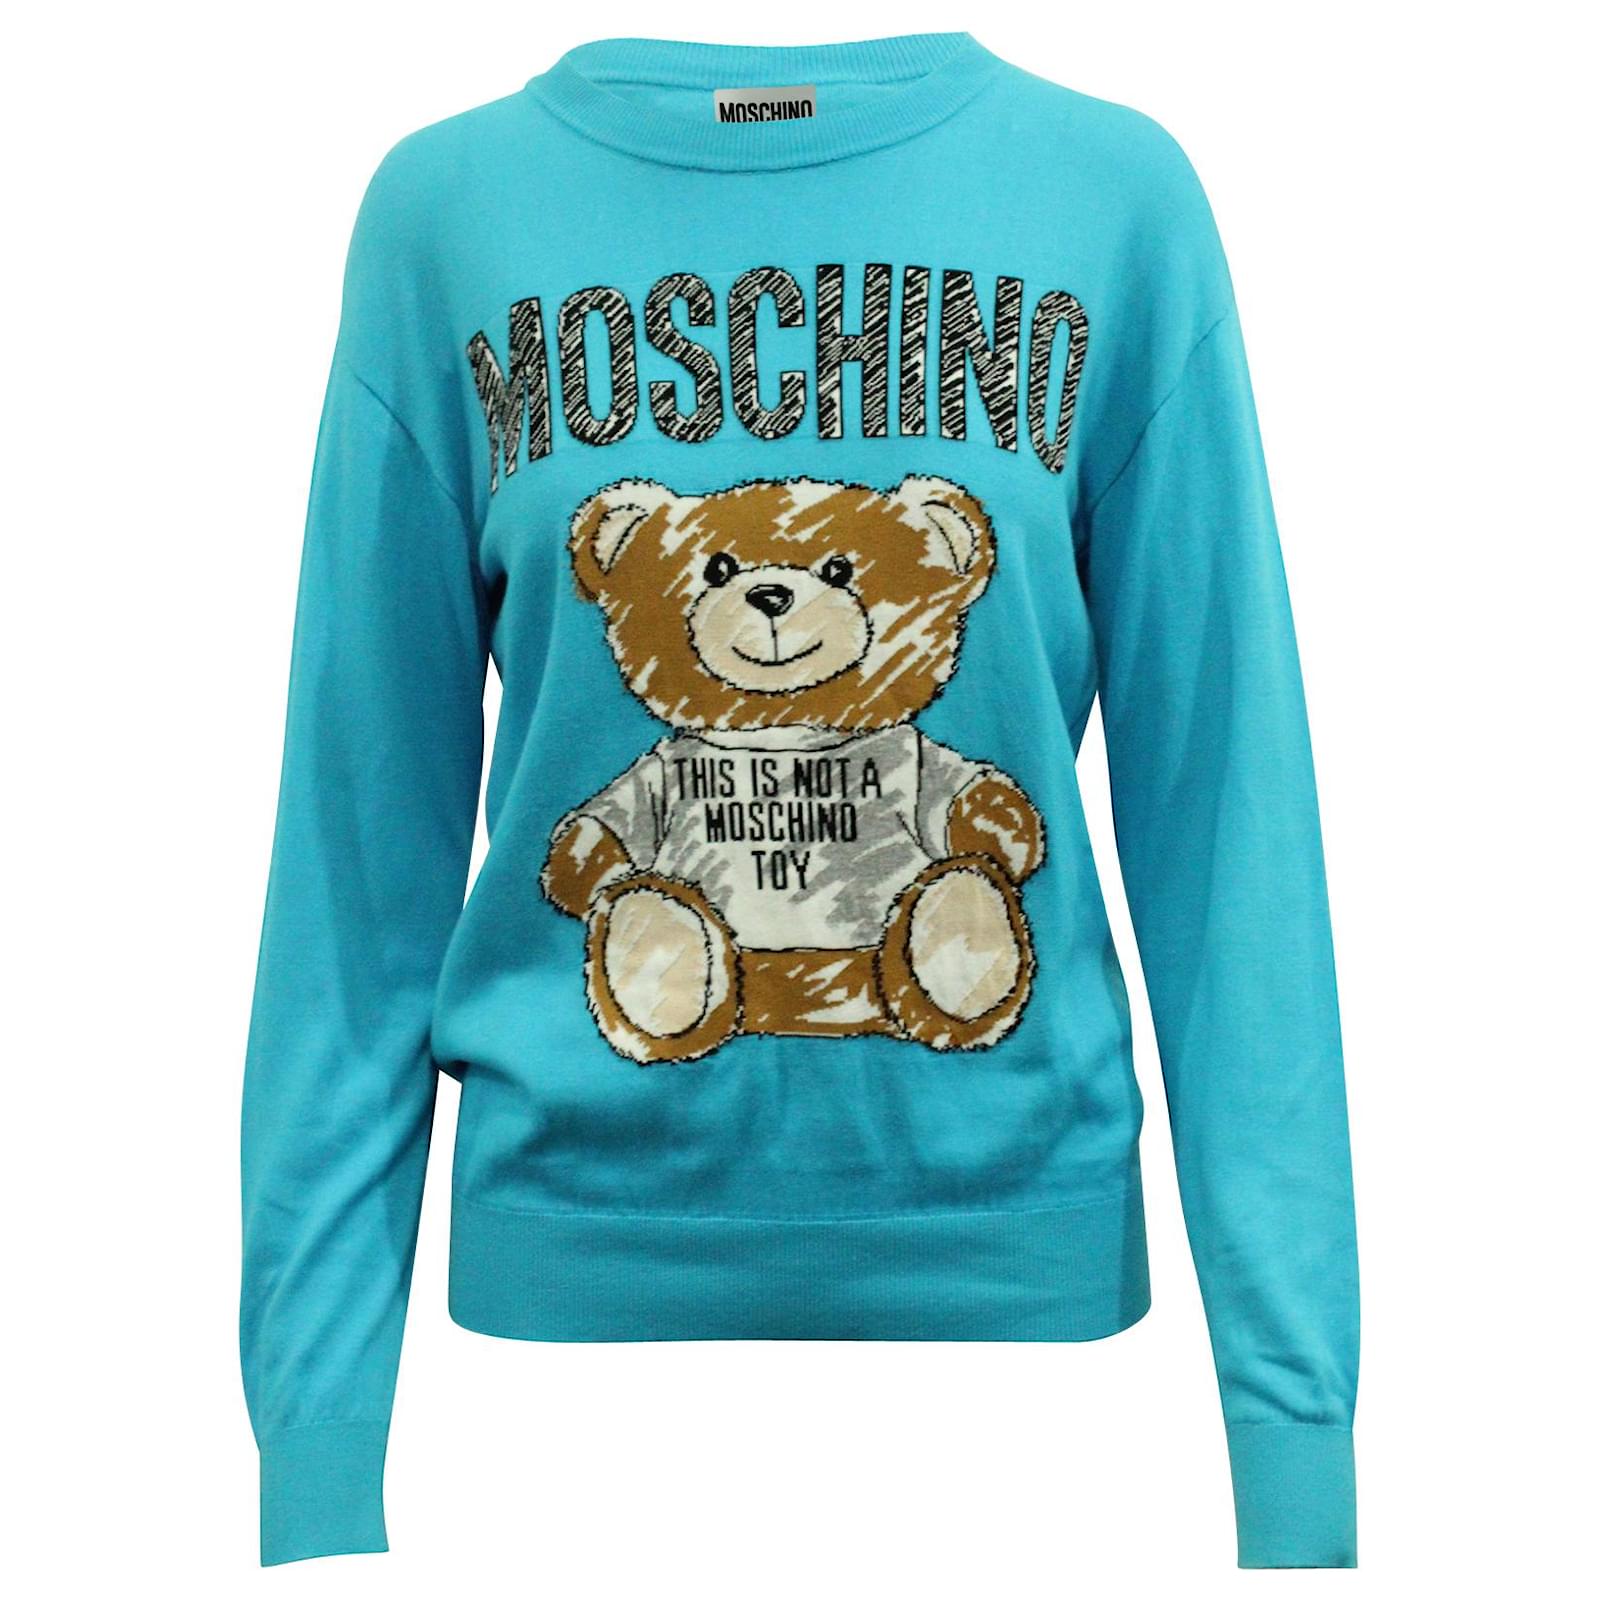 https://cdn1.jolicloset.com/imgr/full/2022/08/602907-1/moschino-teddy-bear-sweatshirt-em-algodao-azul-malhas.jpg